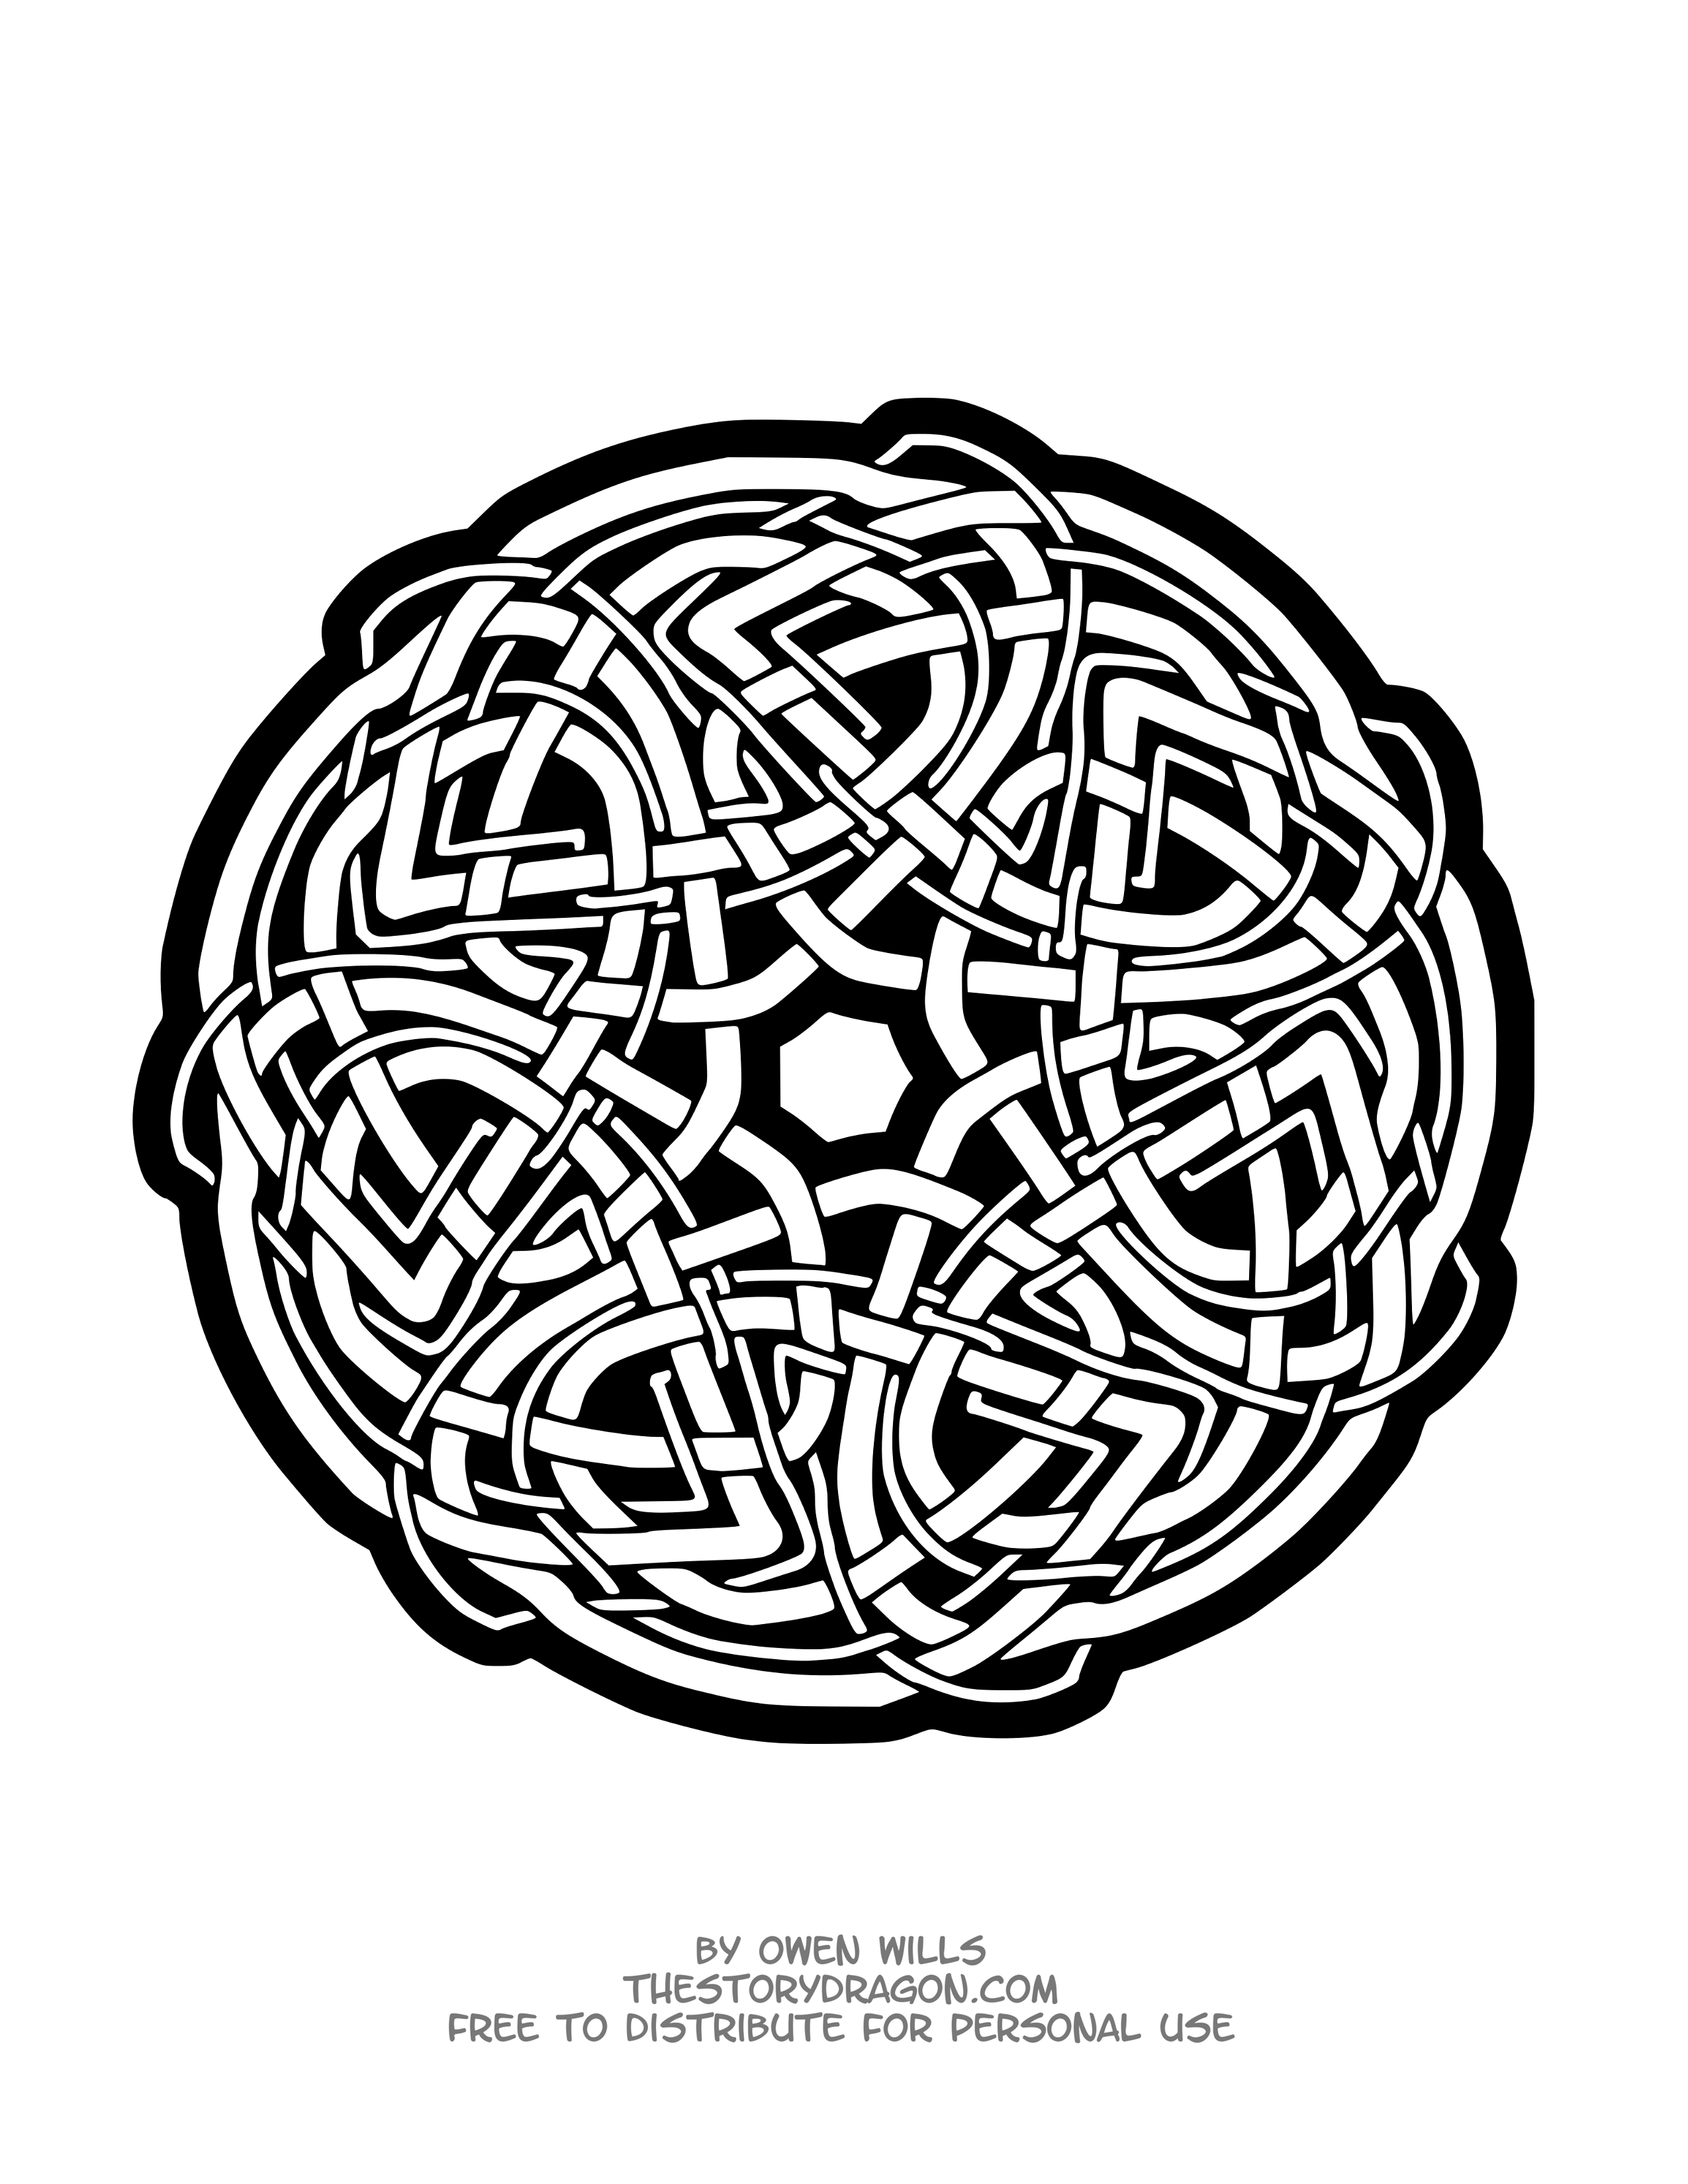 Mandala inspired by Celtic style, Artist : Owen Wills